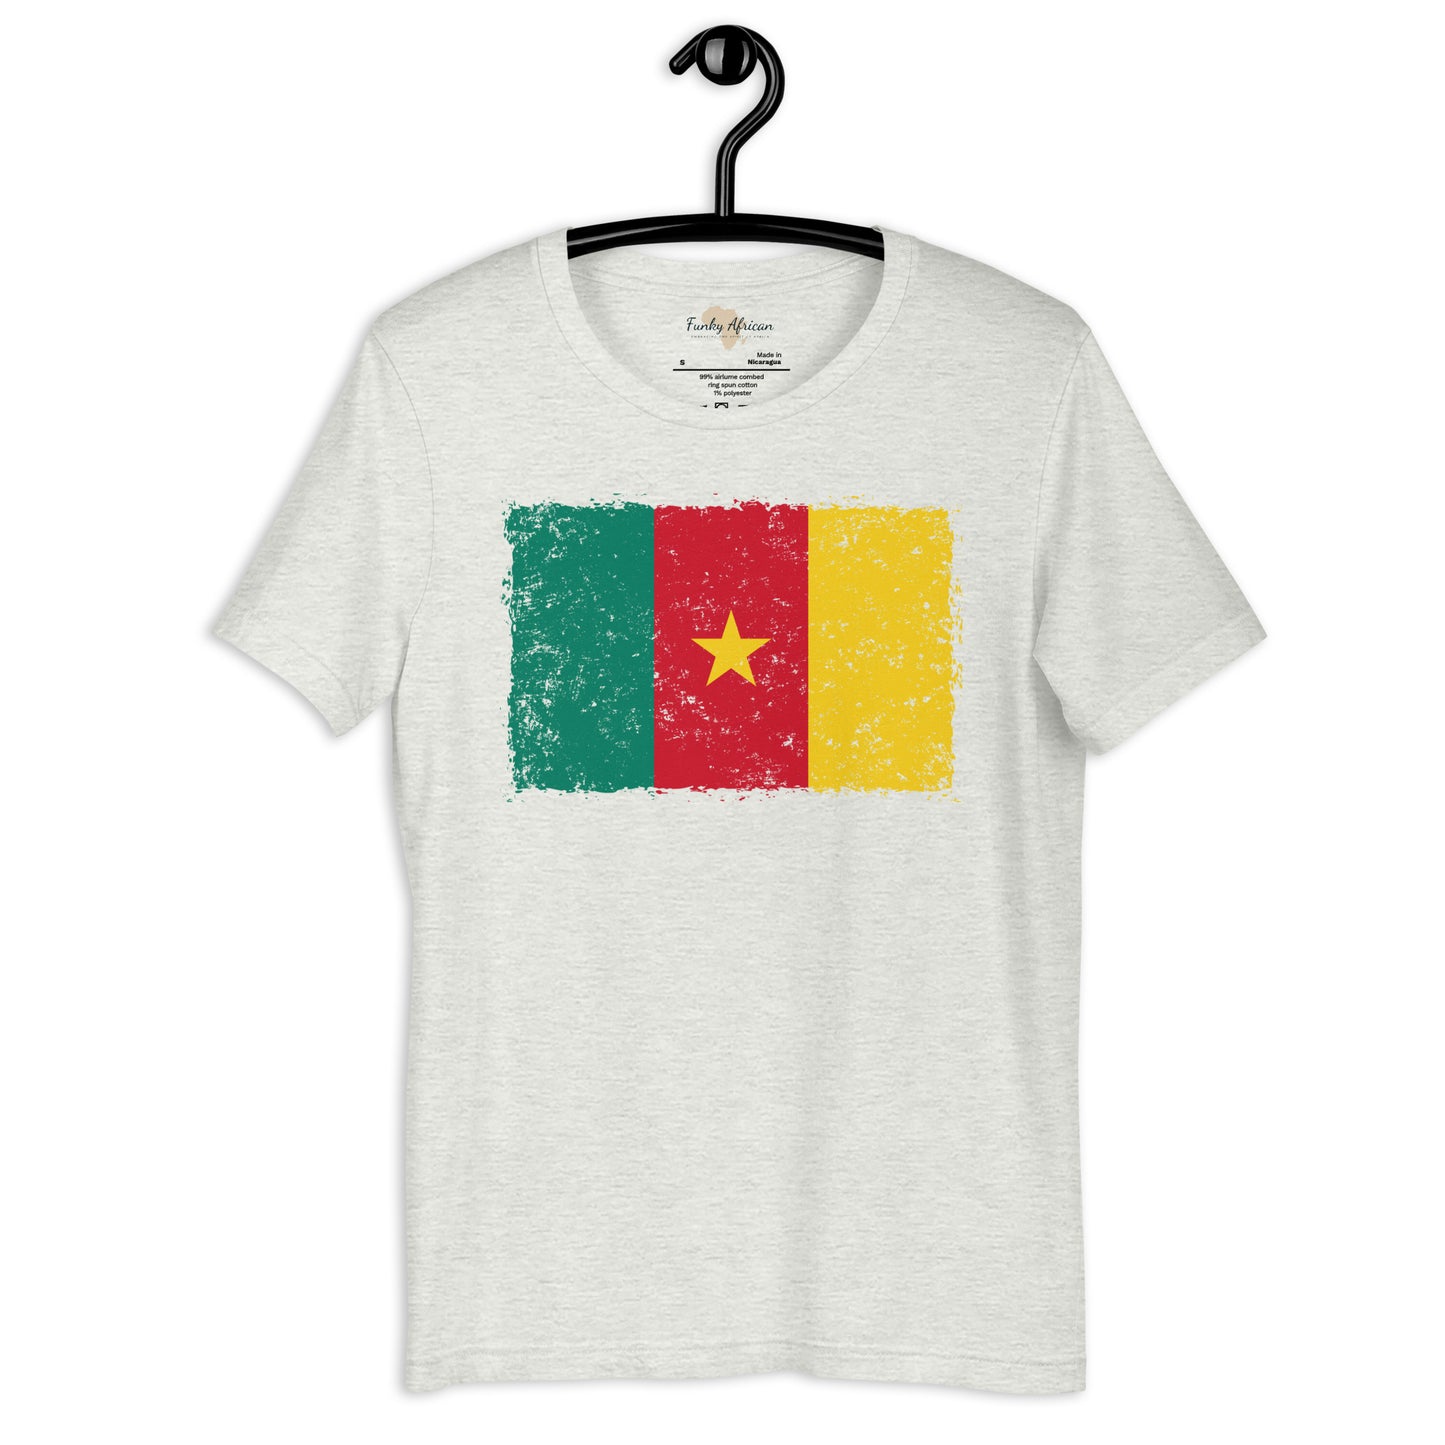 Cameroon  grunge unisex tee